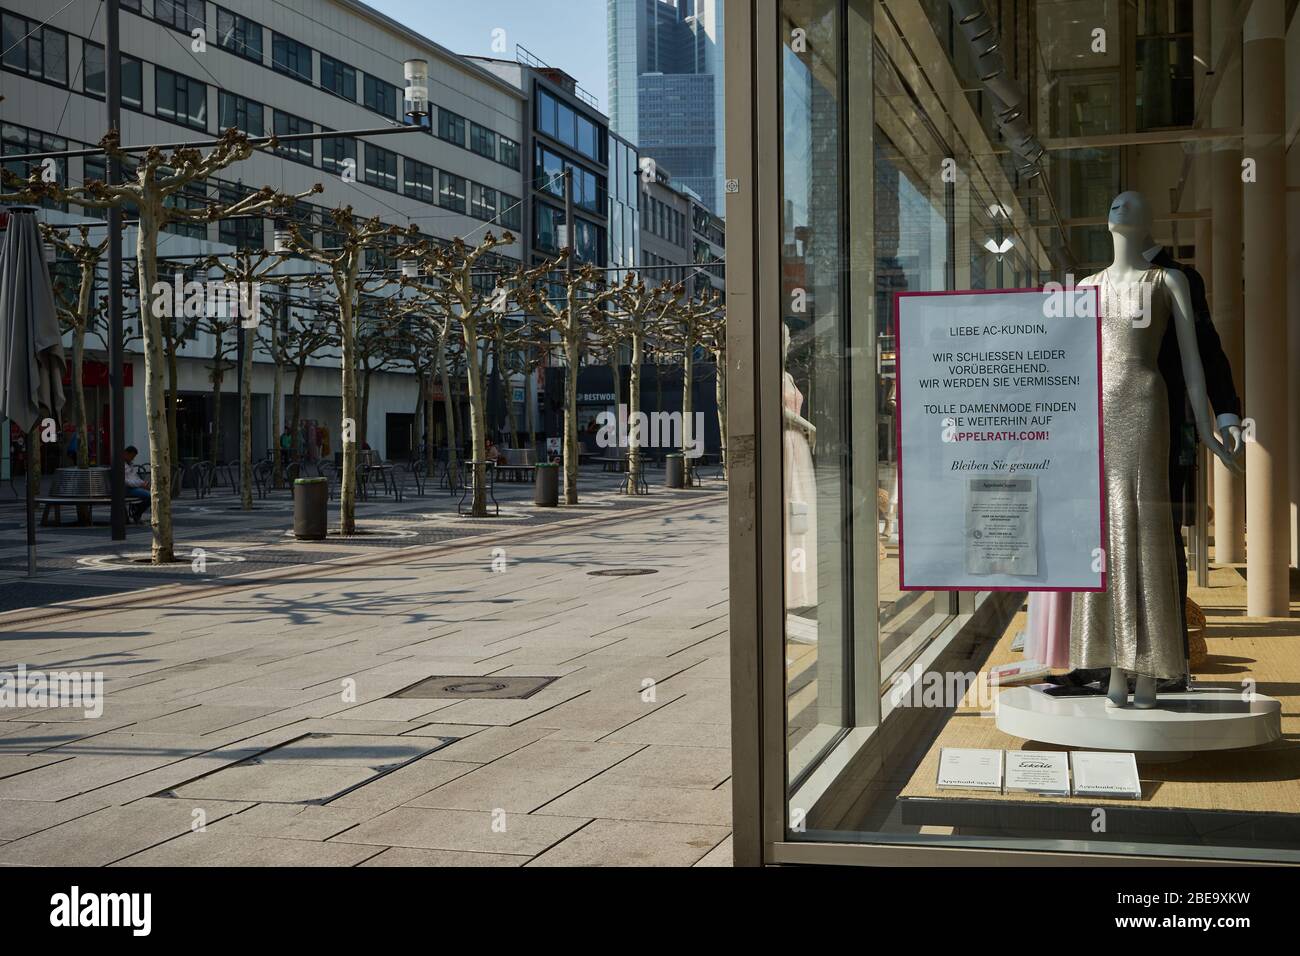 Zeil, wegen dem Coronavirus menschenleer, Innenstadt, Frankfurt am Main, Hessen, Deutschland Stock Photo